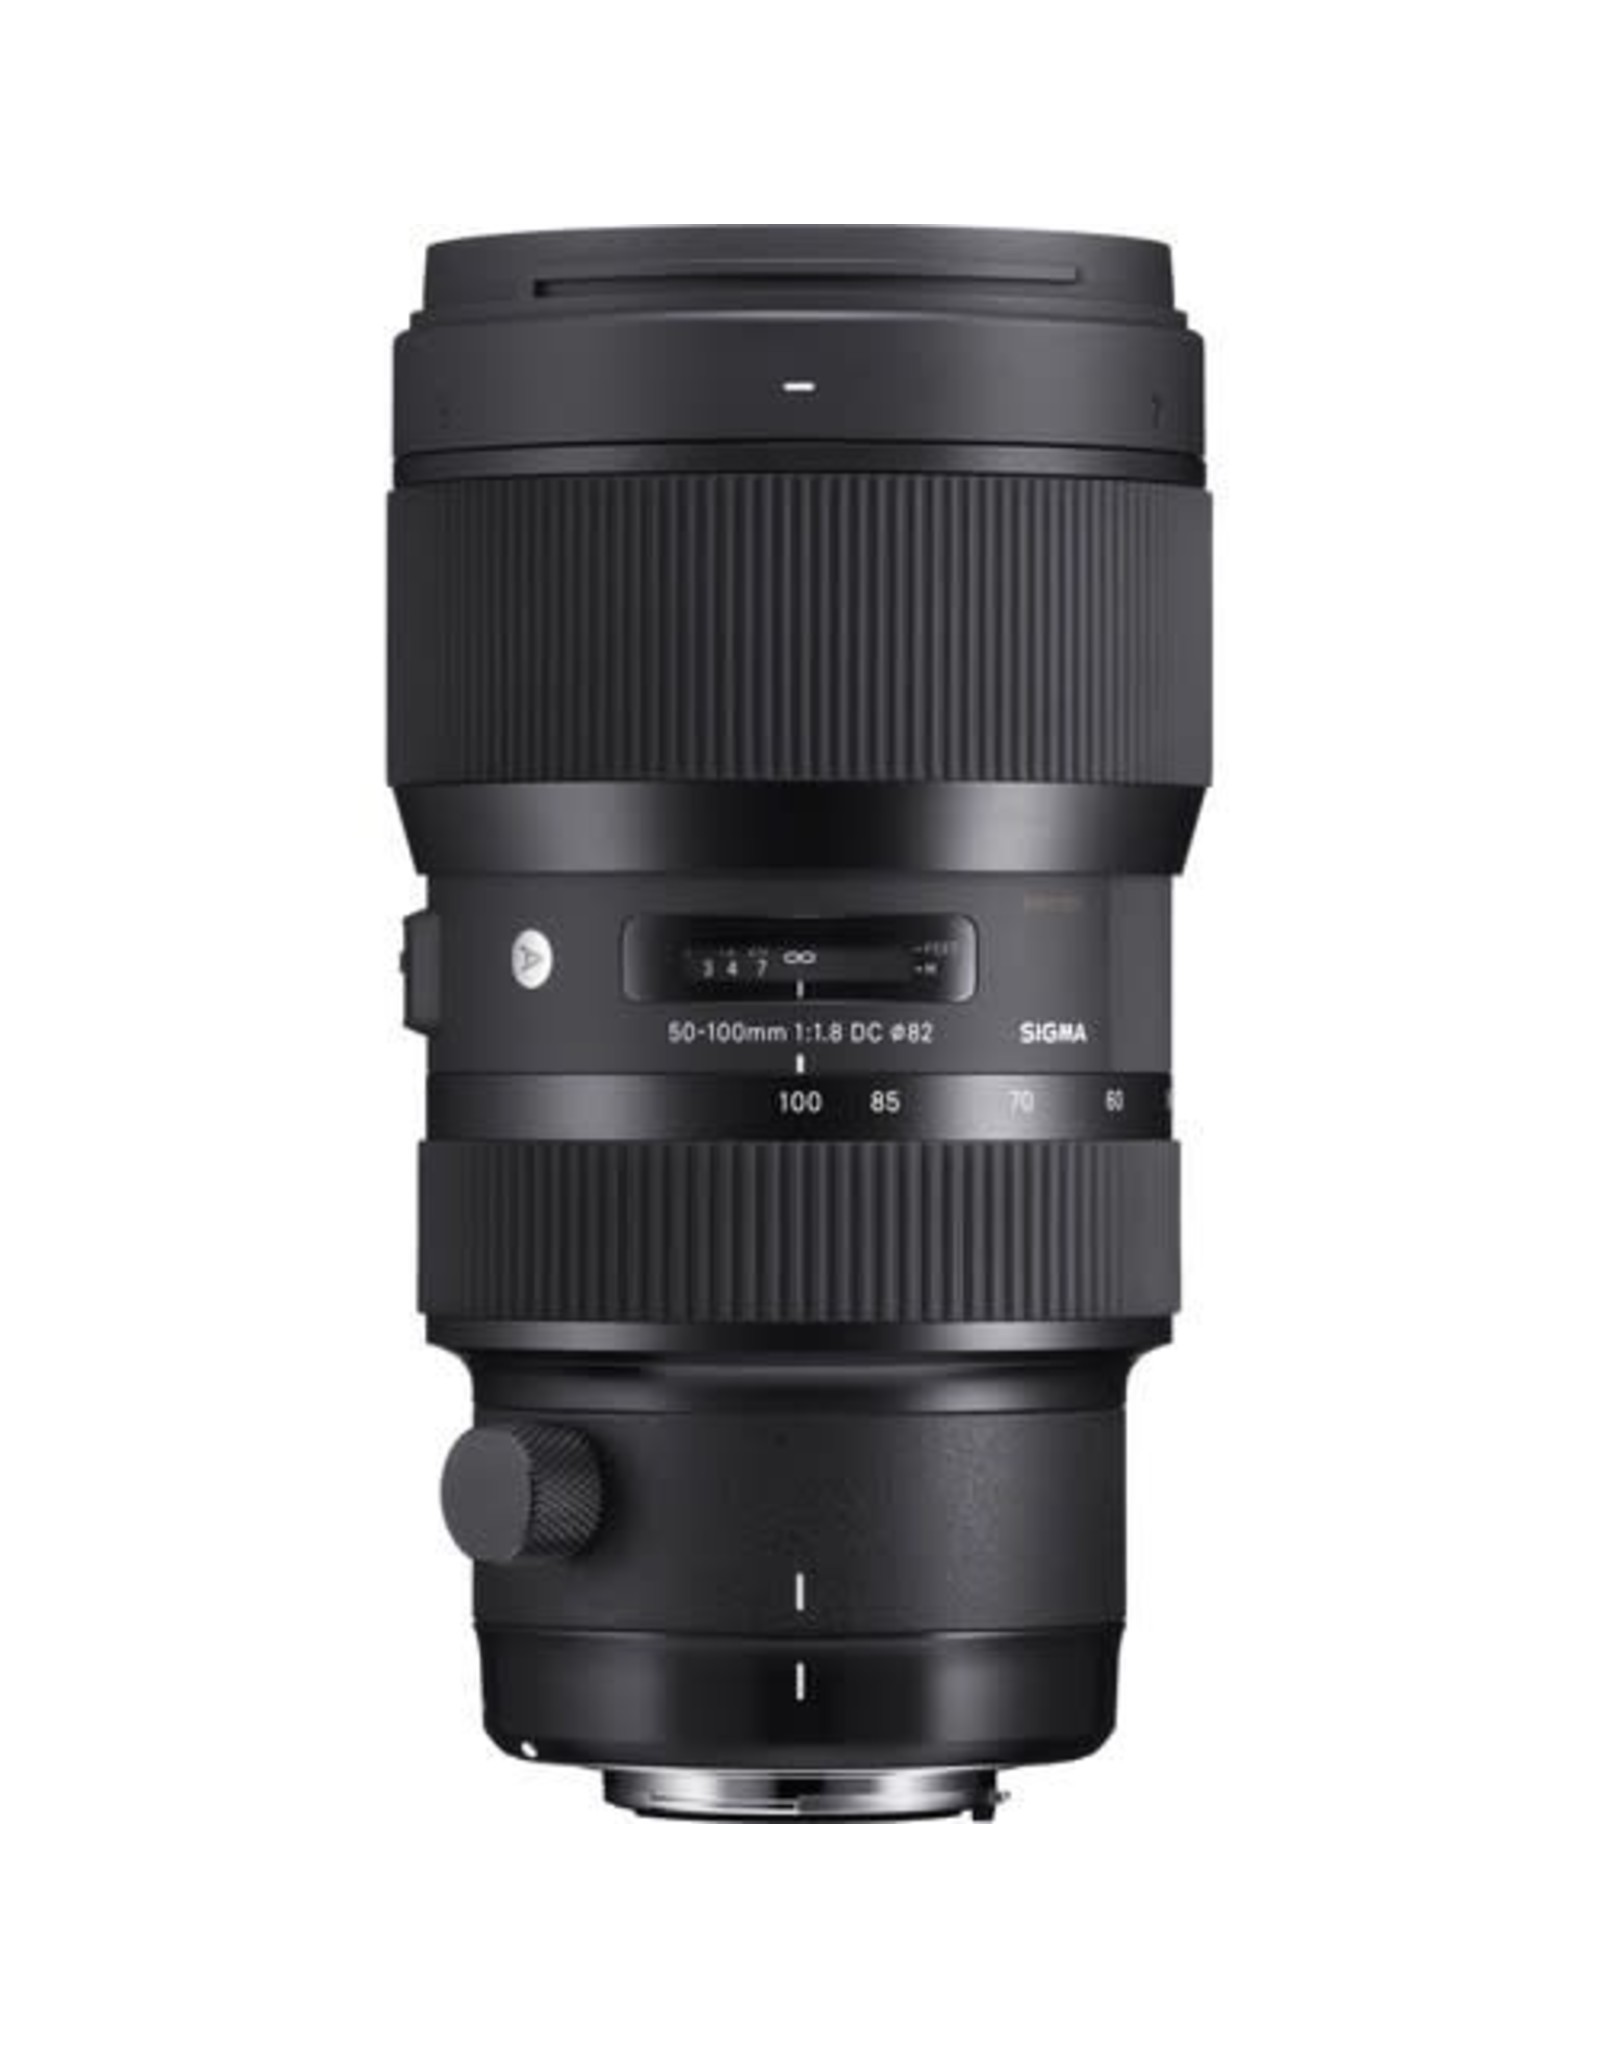 Sigma Sigma 50-100mm f1.8 Art DC HSM (Specify Mount Type)Nikon